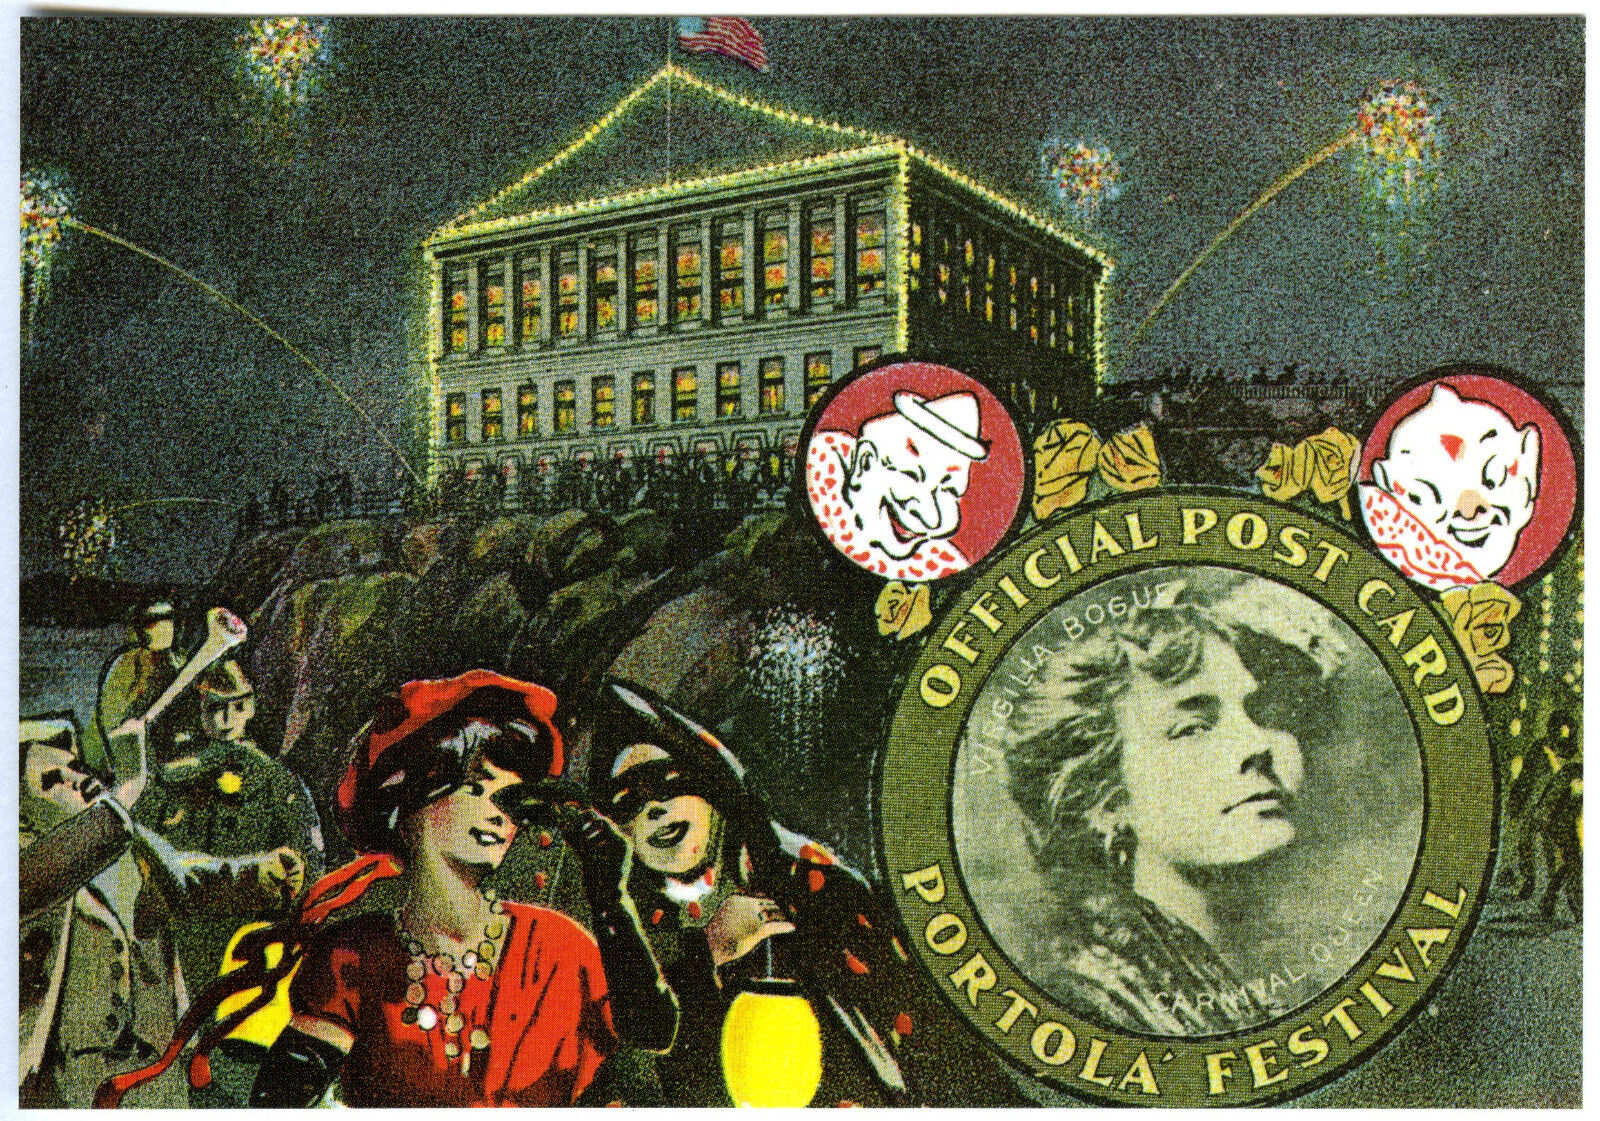 SAN FRANCISCO CLIFF HOUSE~1909 PORTOLA FESTIVAL OFFICIAL POSTCARD~NEW 1974 REPRO